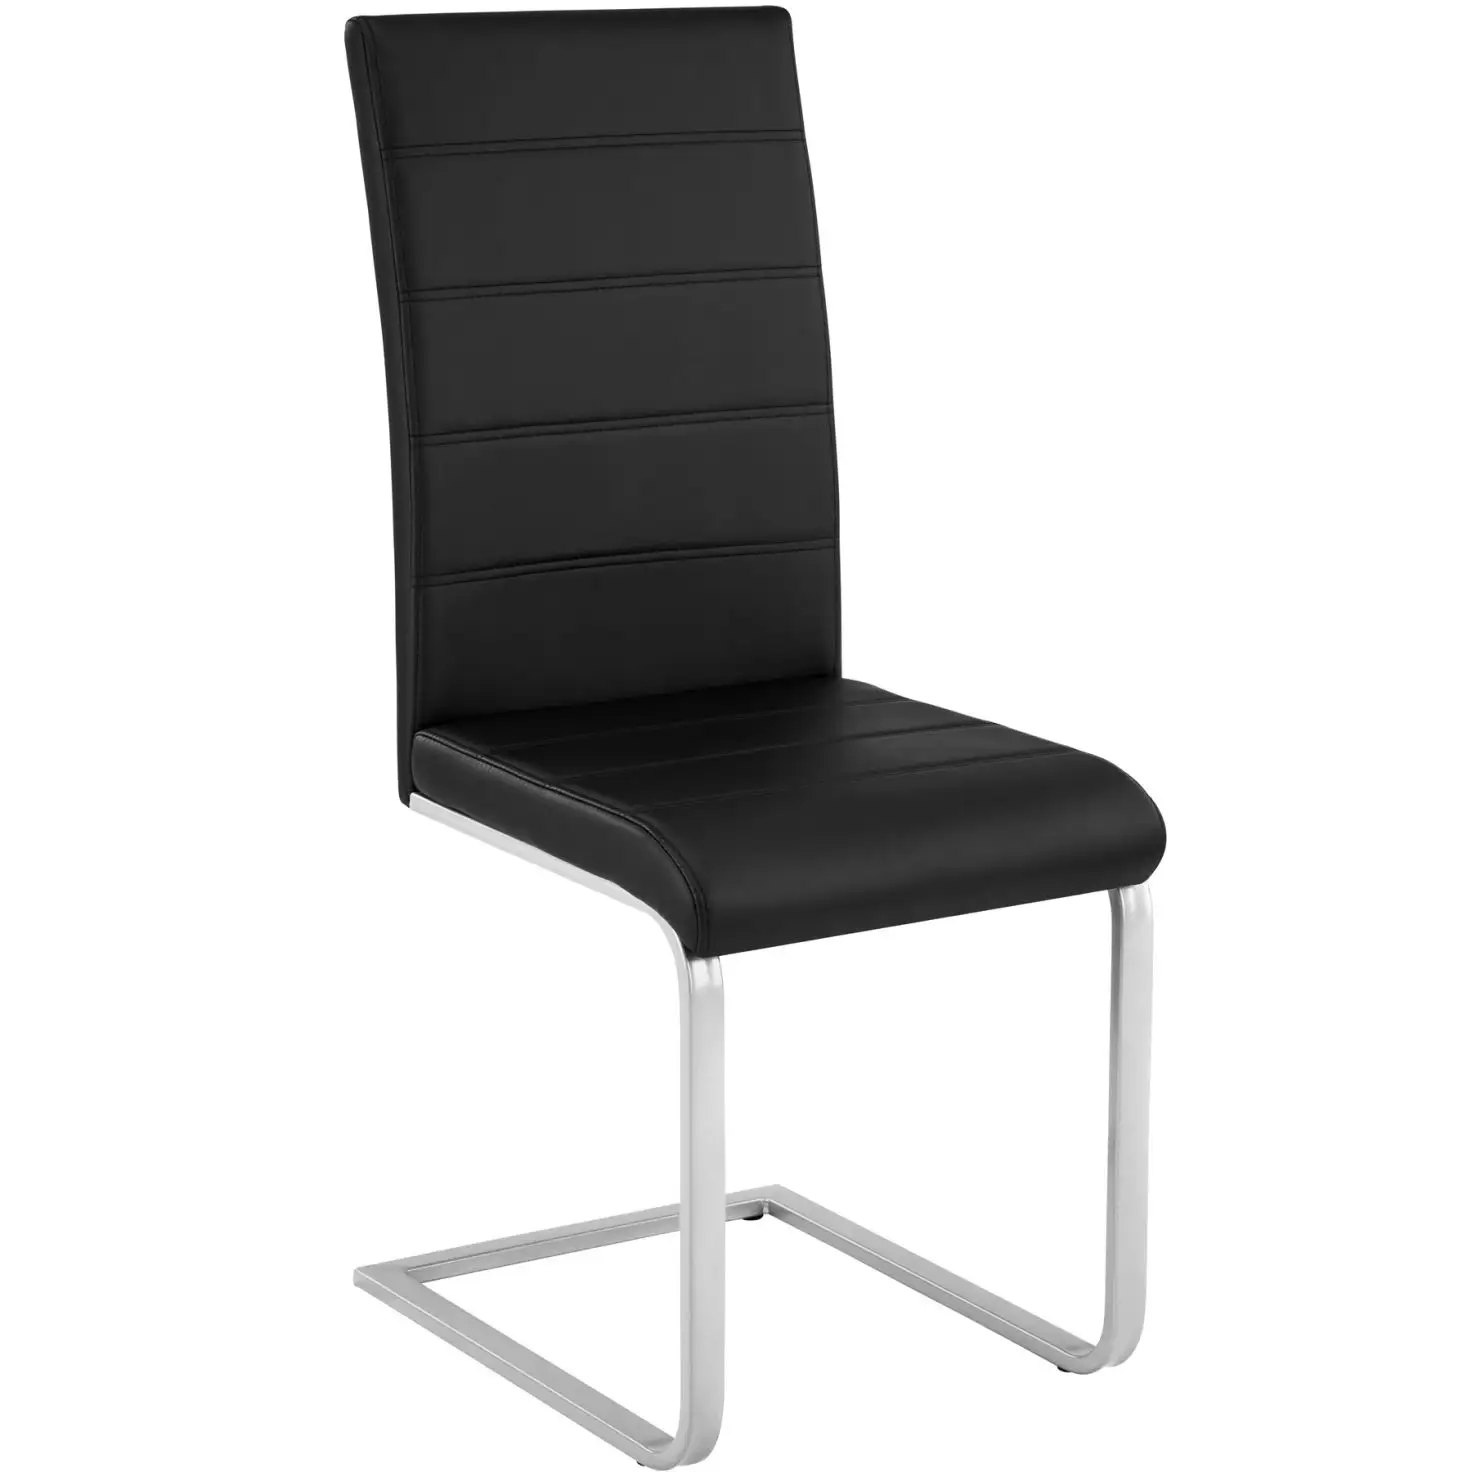 Free Sample Wishbone Y Grey Steel C 001 Modshop Monaco Elegant 2013 Crushed Velvet 17 Inch Leg Black Red Room Dining Chair